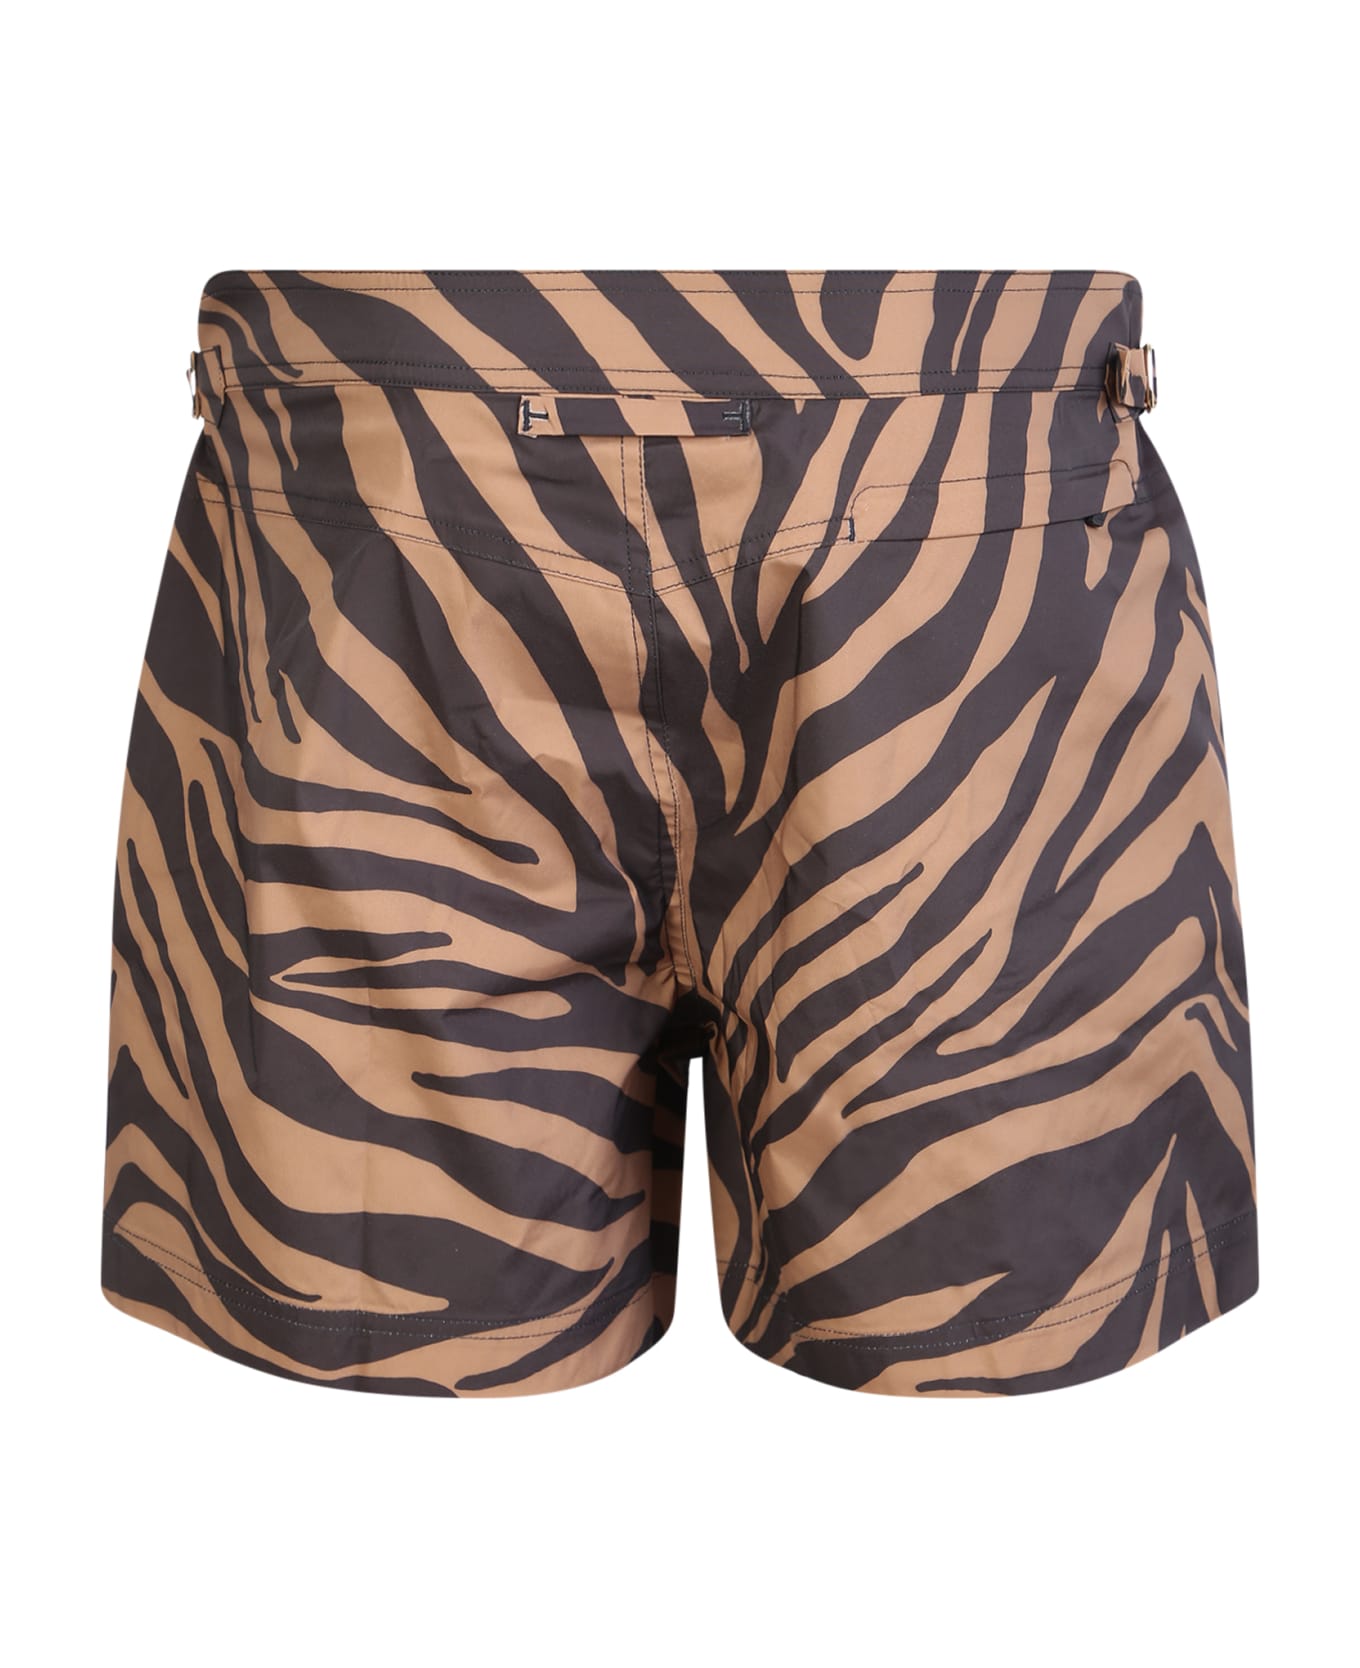 Tom Ford Zebra Print Swim Shorts - Beige 水着